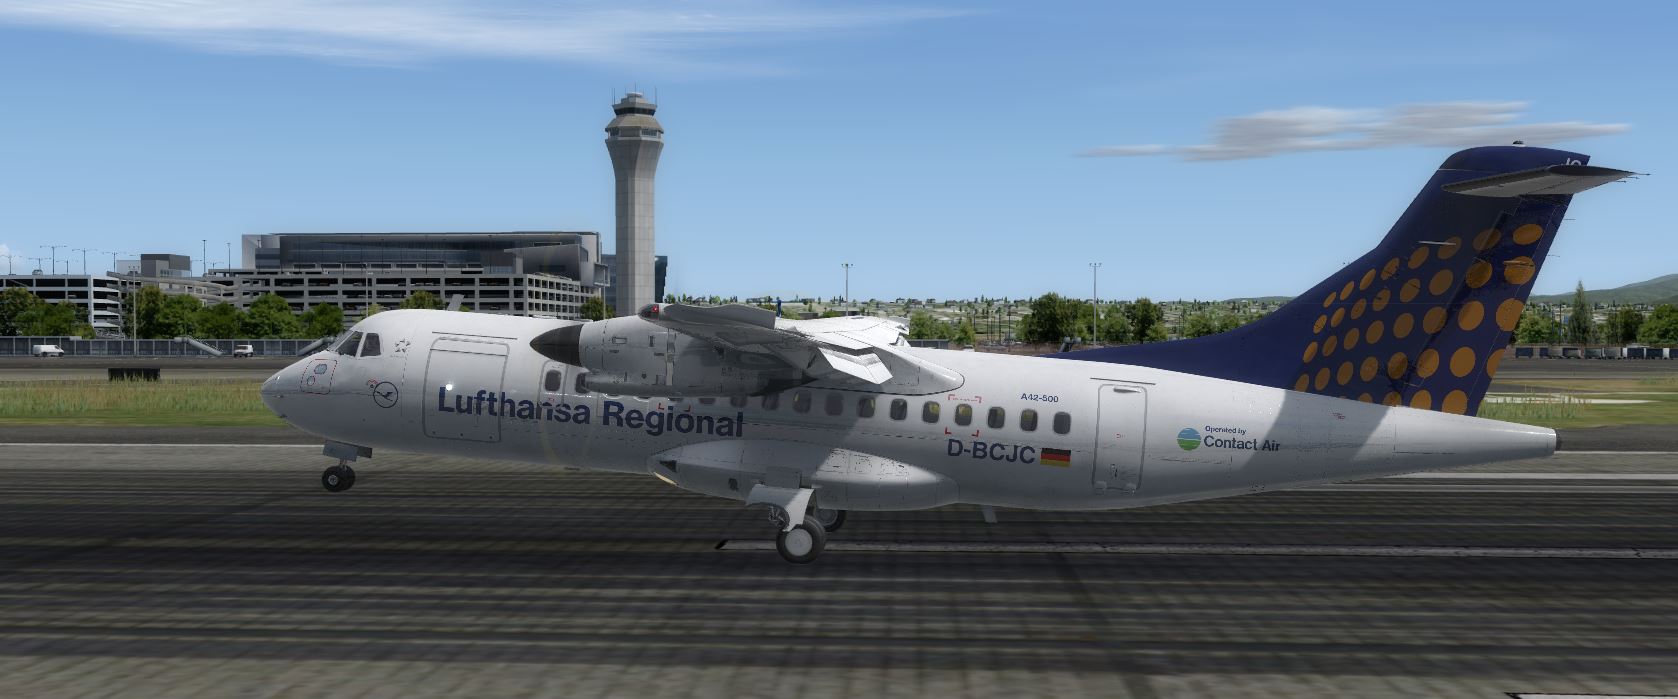 ATR42-500 Lufthansa-6696 